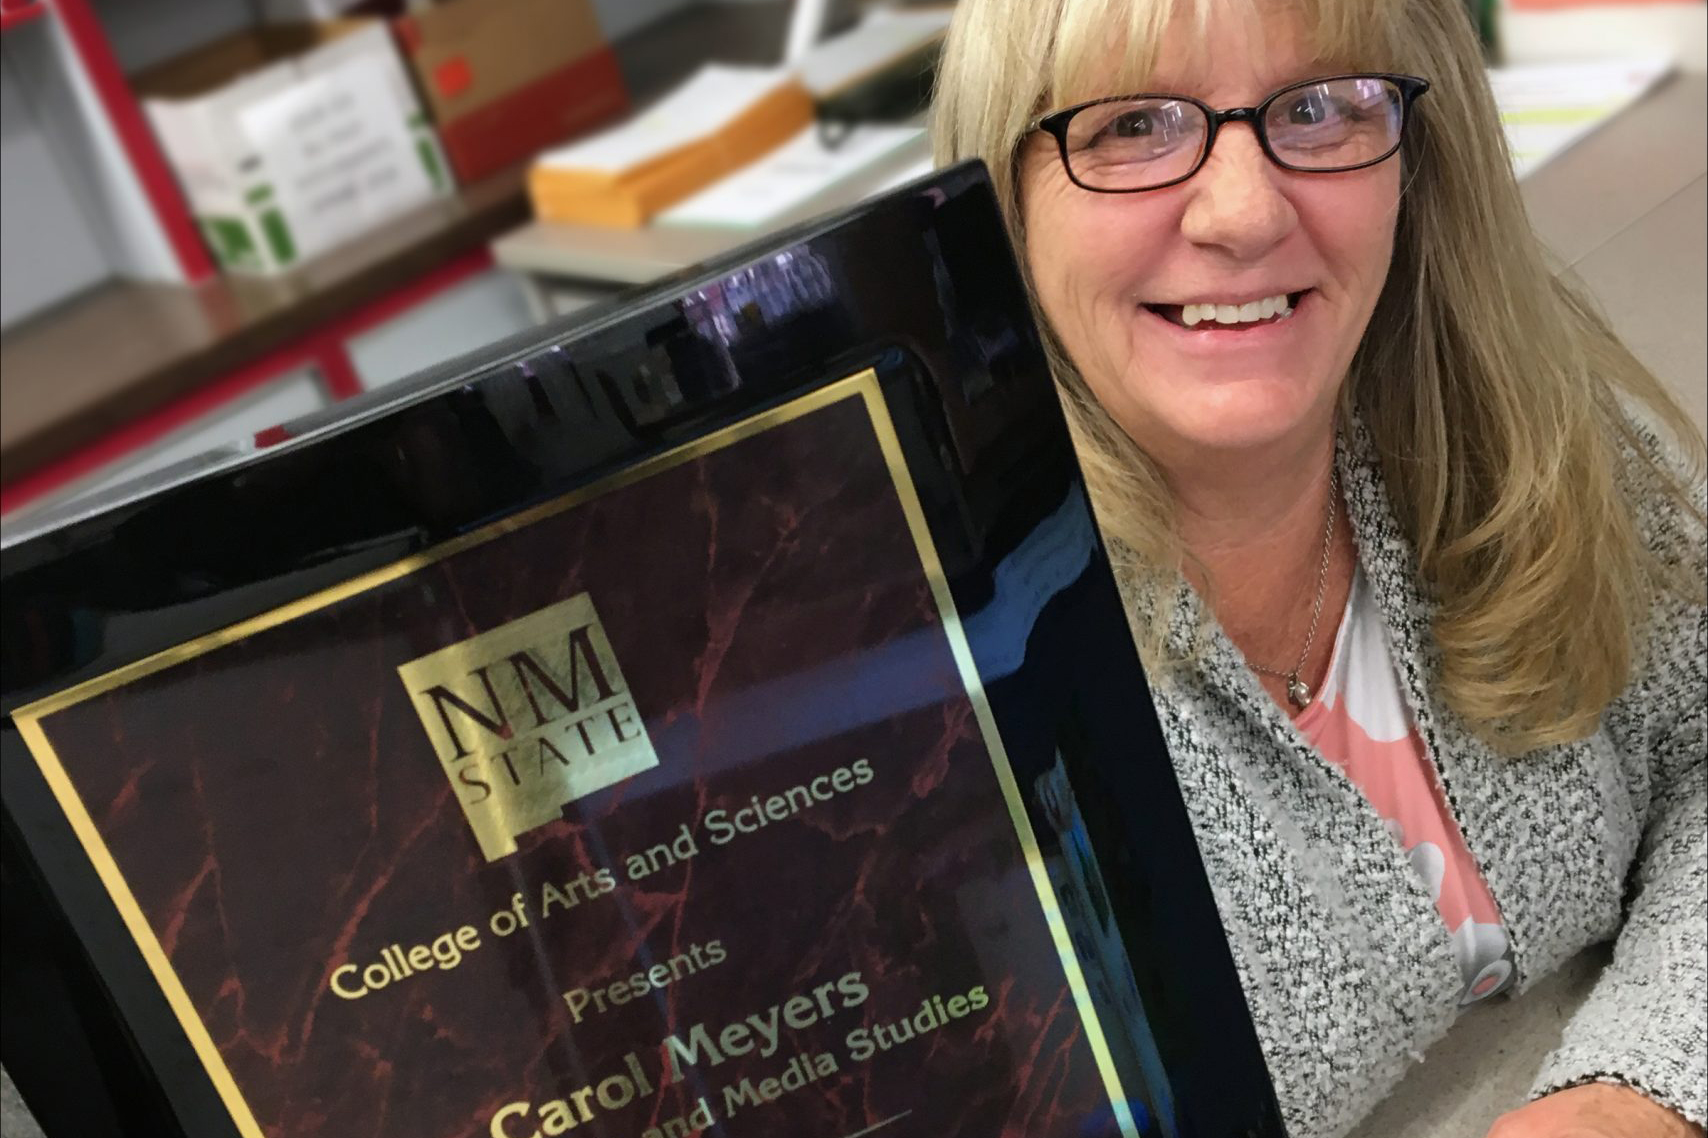 Carol Meyers holds up her award plaque